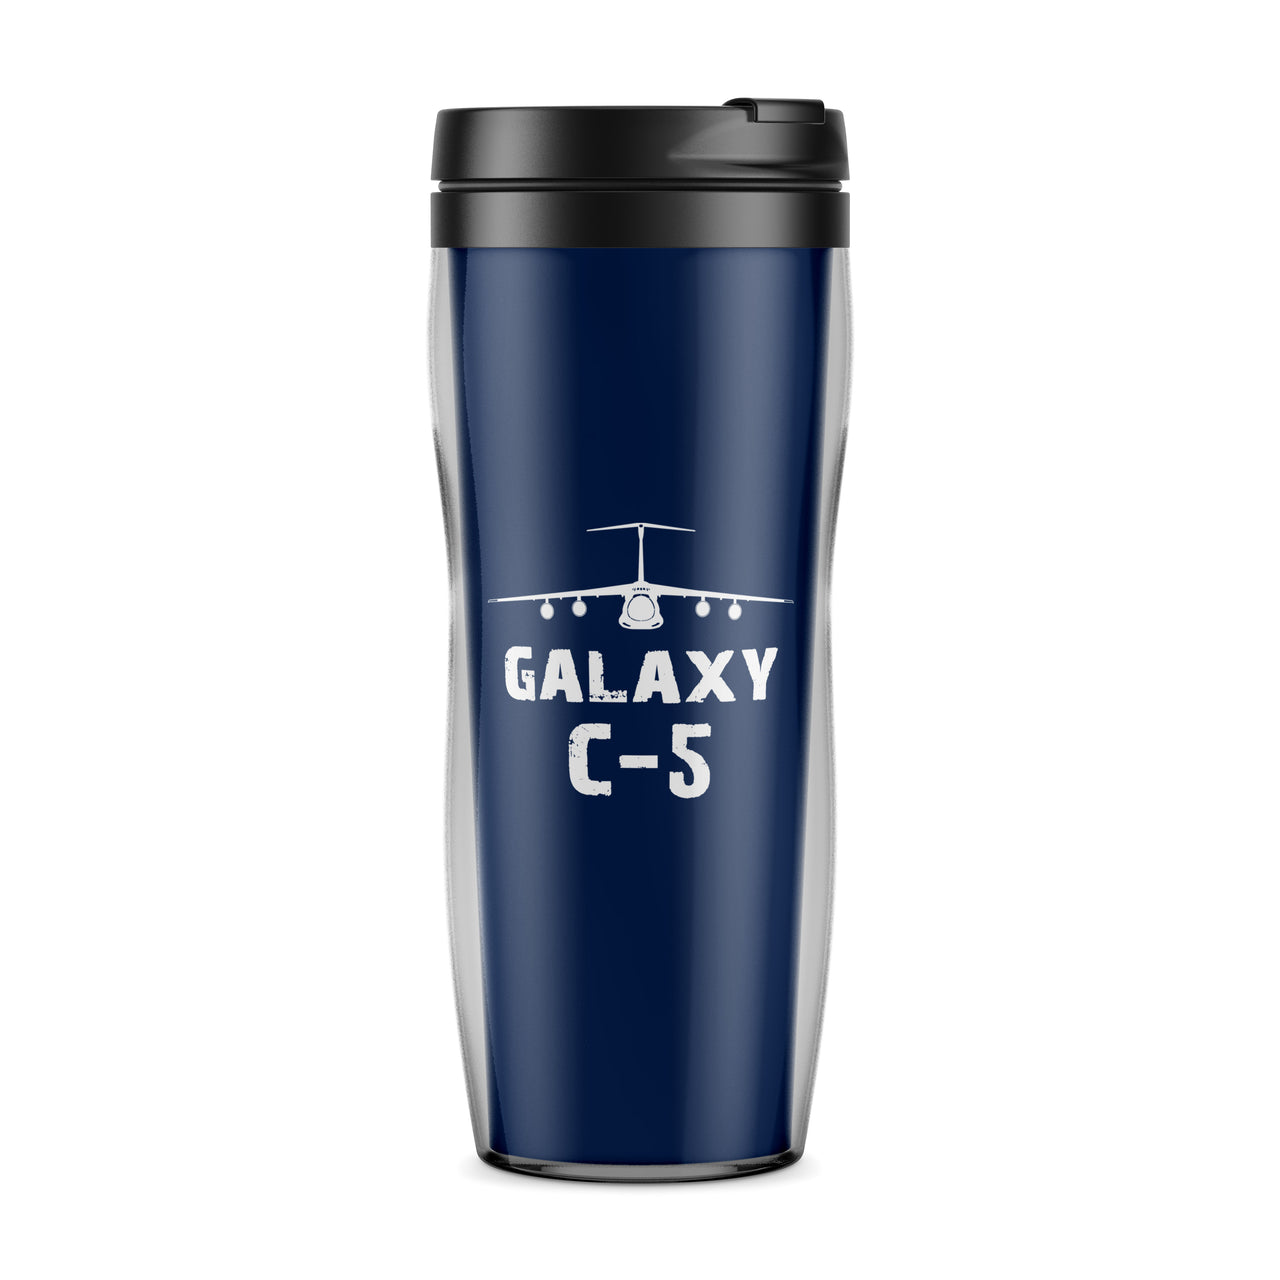 Galaxy C-5 & Plane Designed Travel Mugs